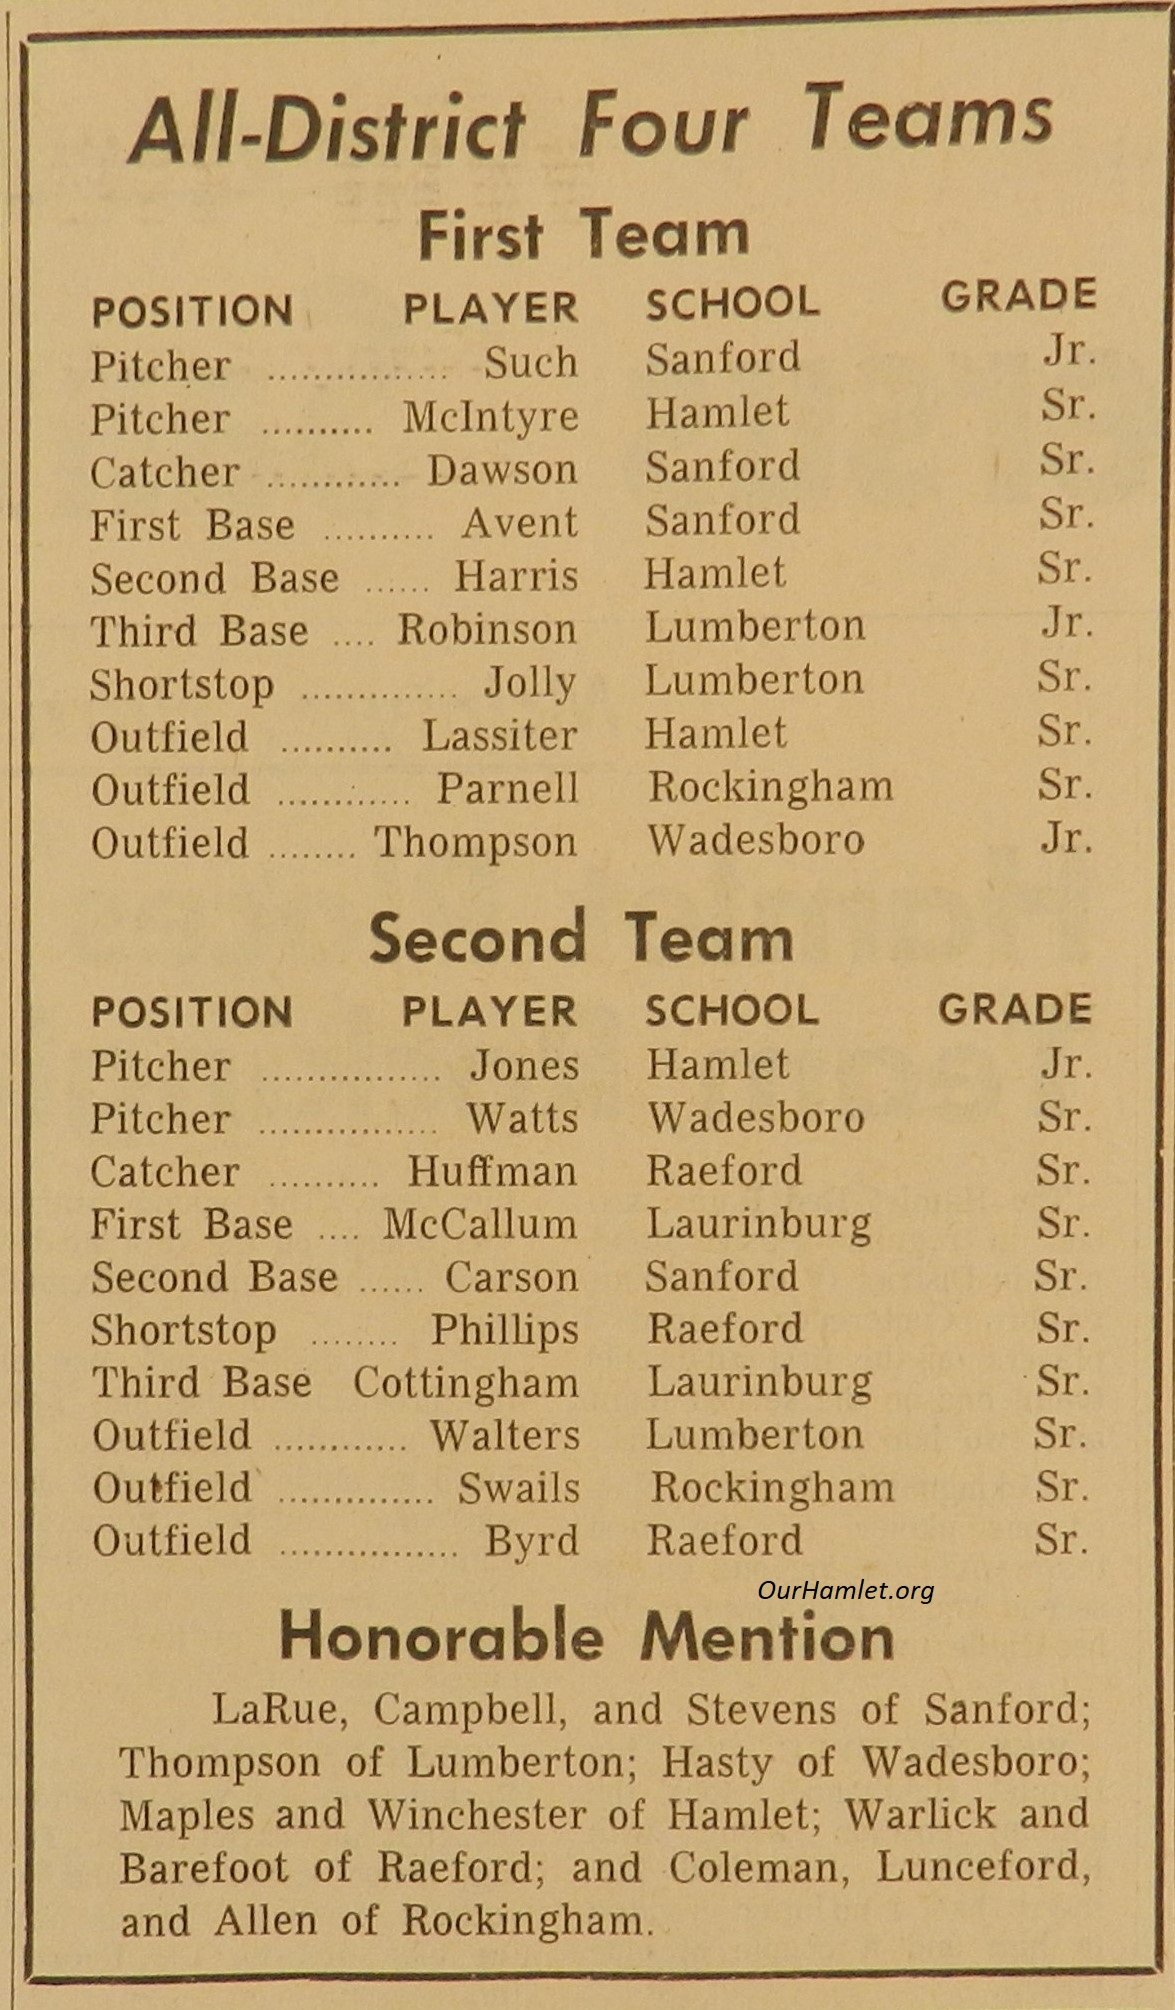 1962 Baseball all-district OH.jpg